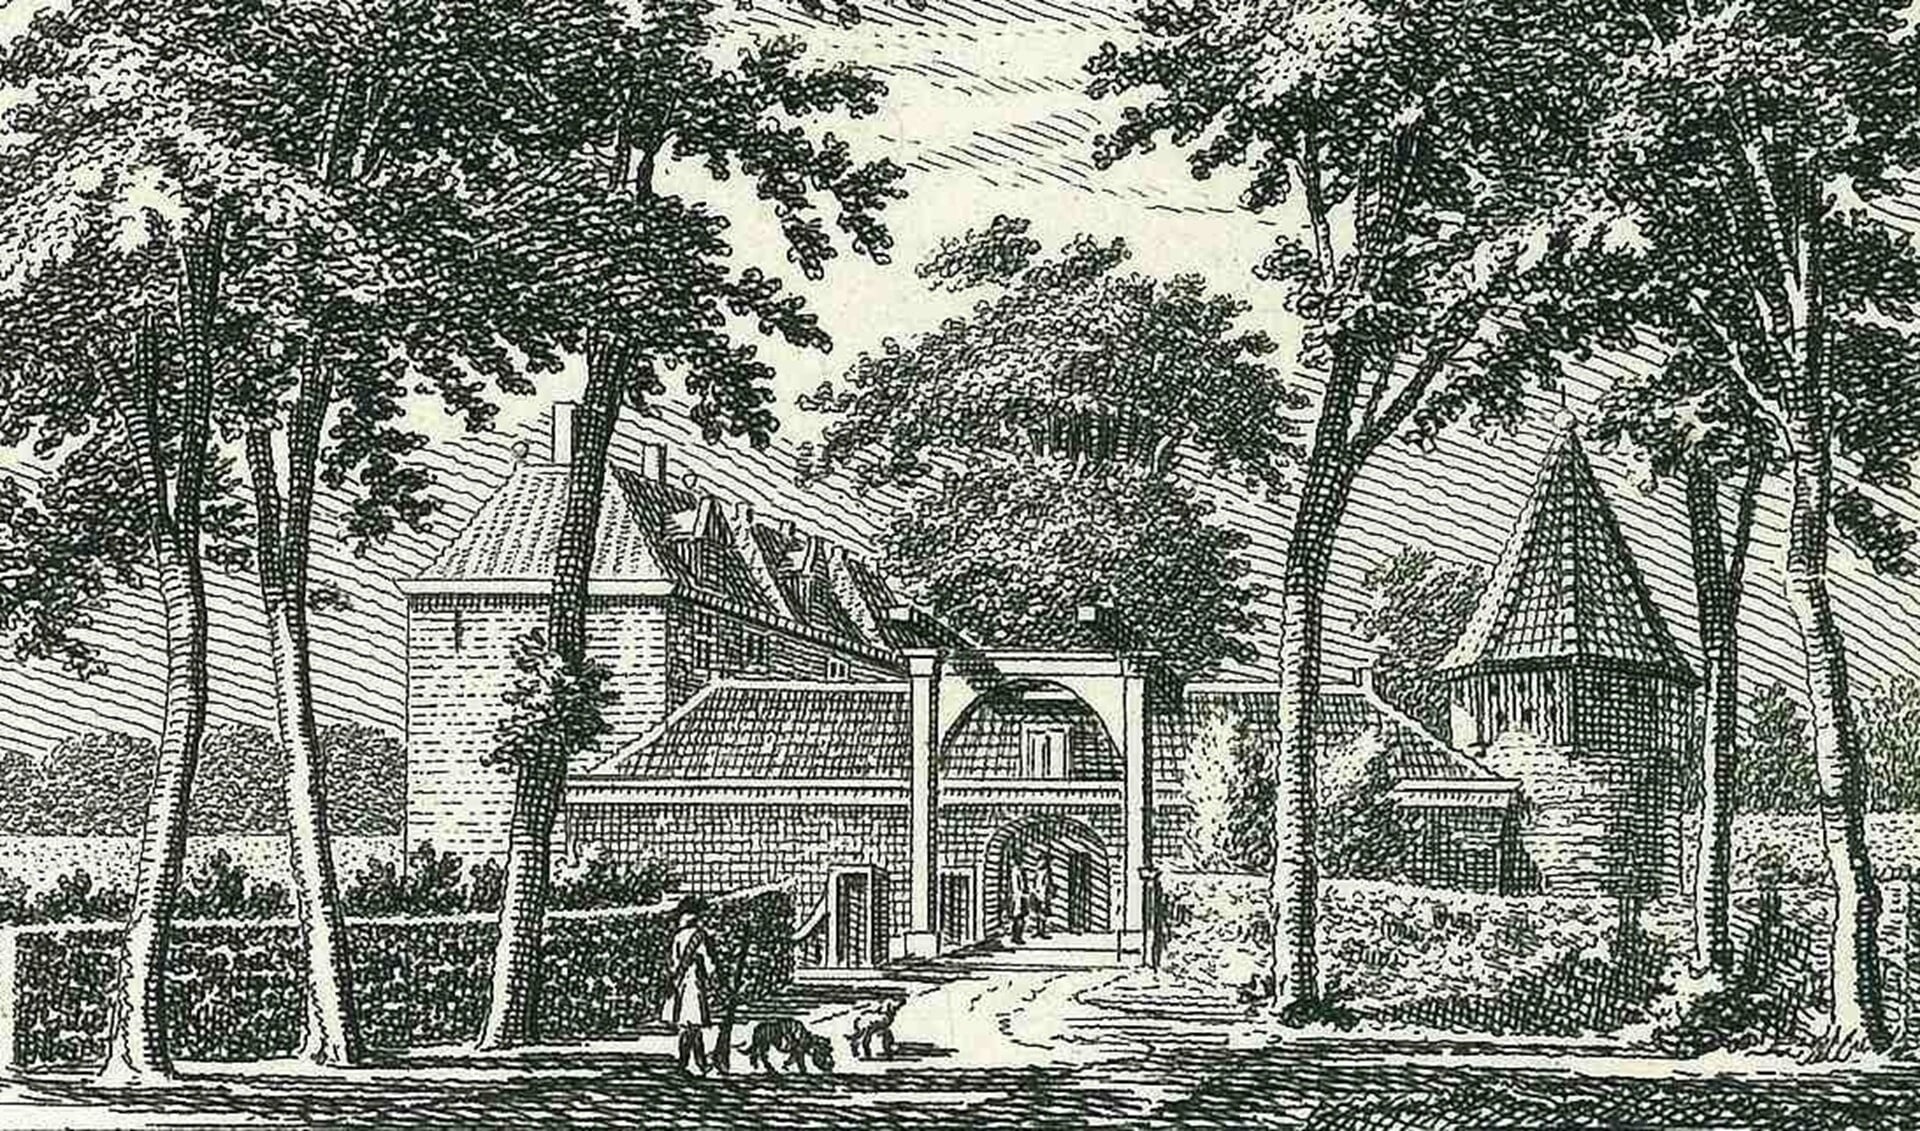 De verdwenen Ridderhofstede De Loo uit 1738